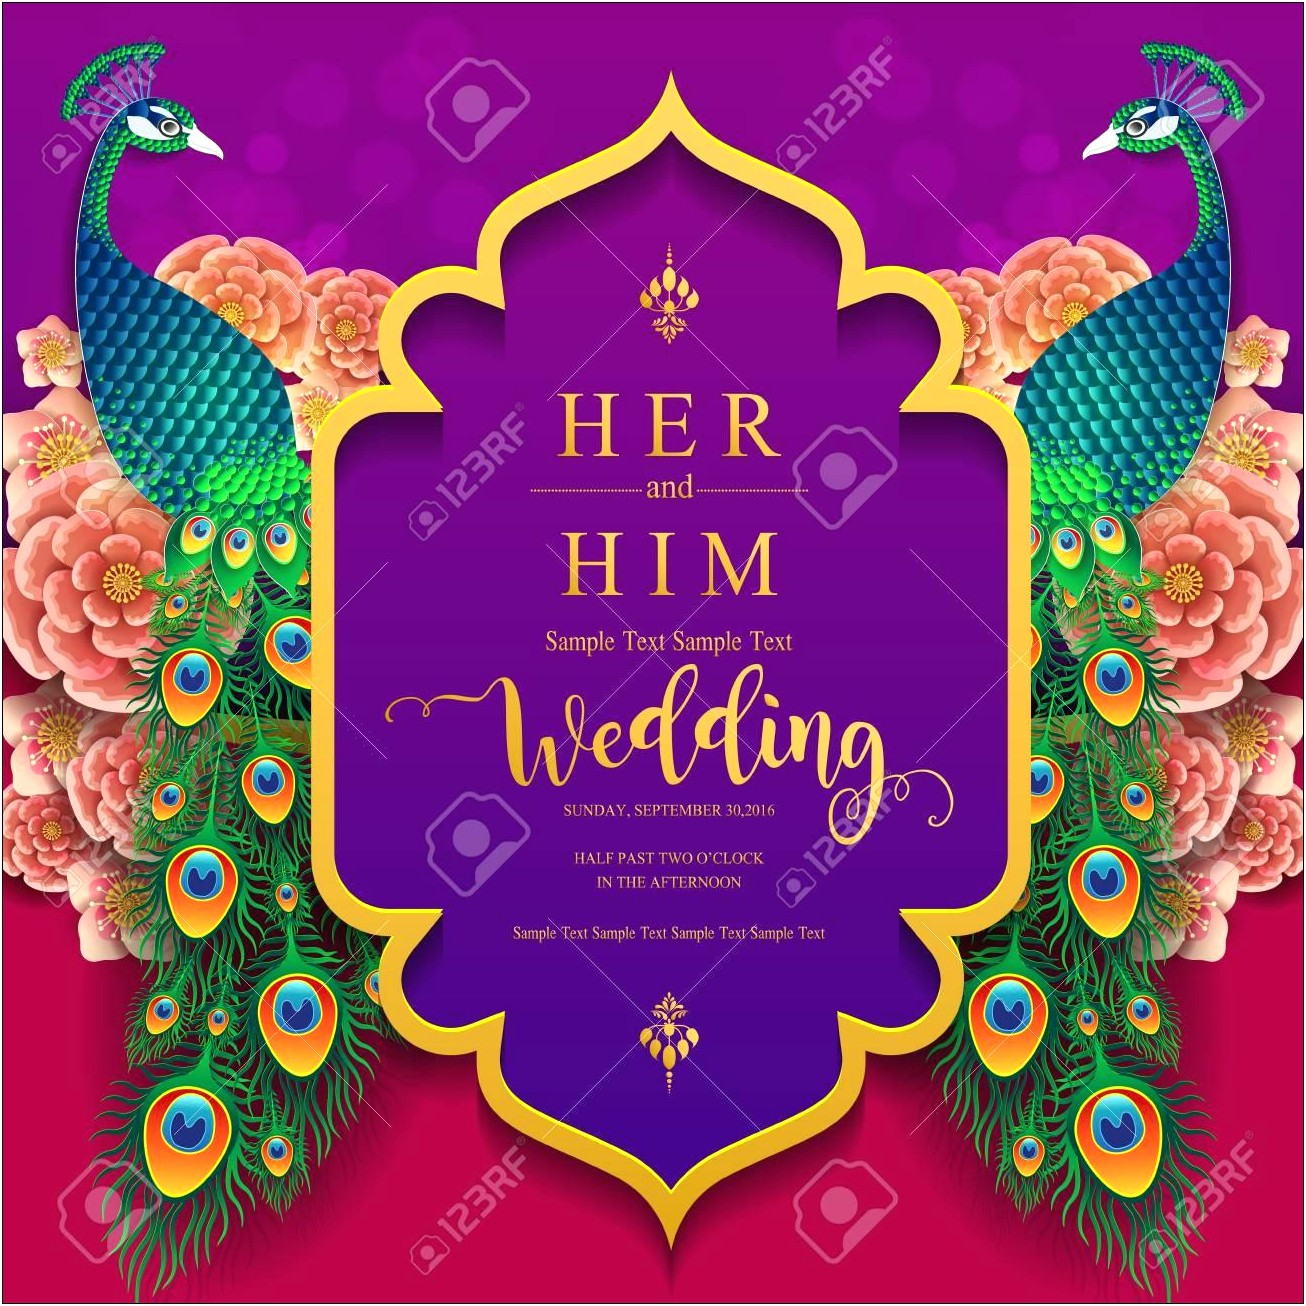 Free Indian Wedding Invitation Card Template